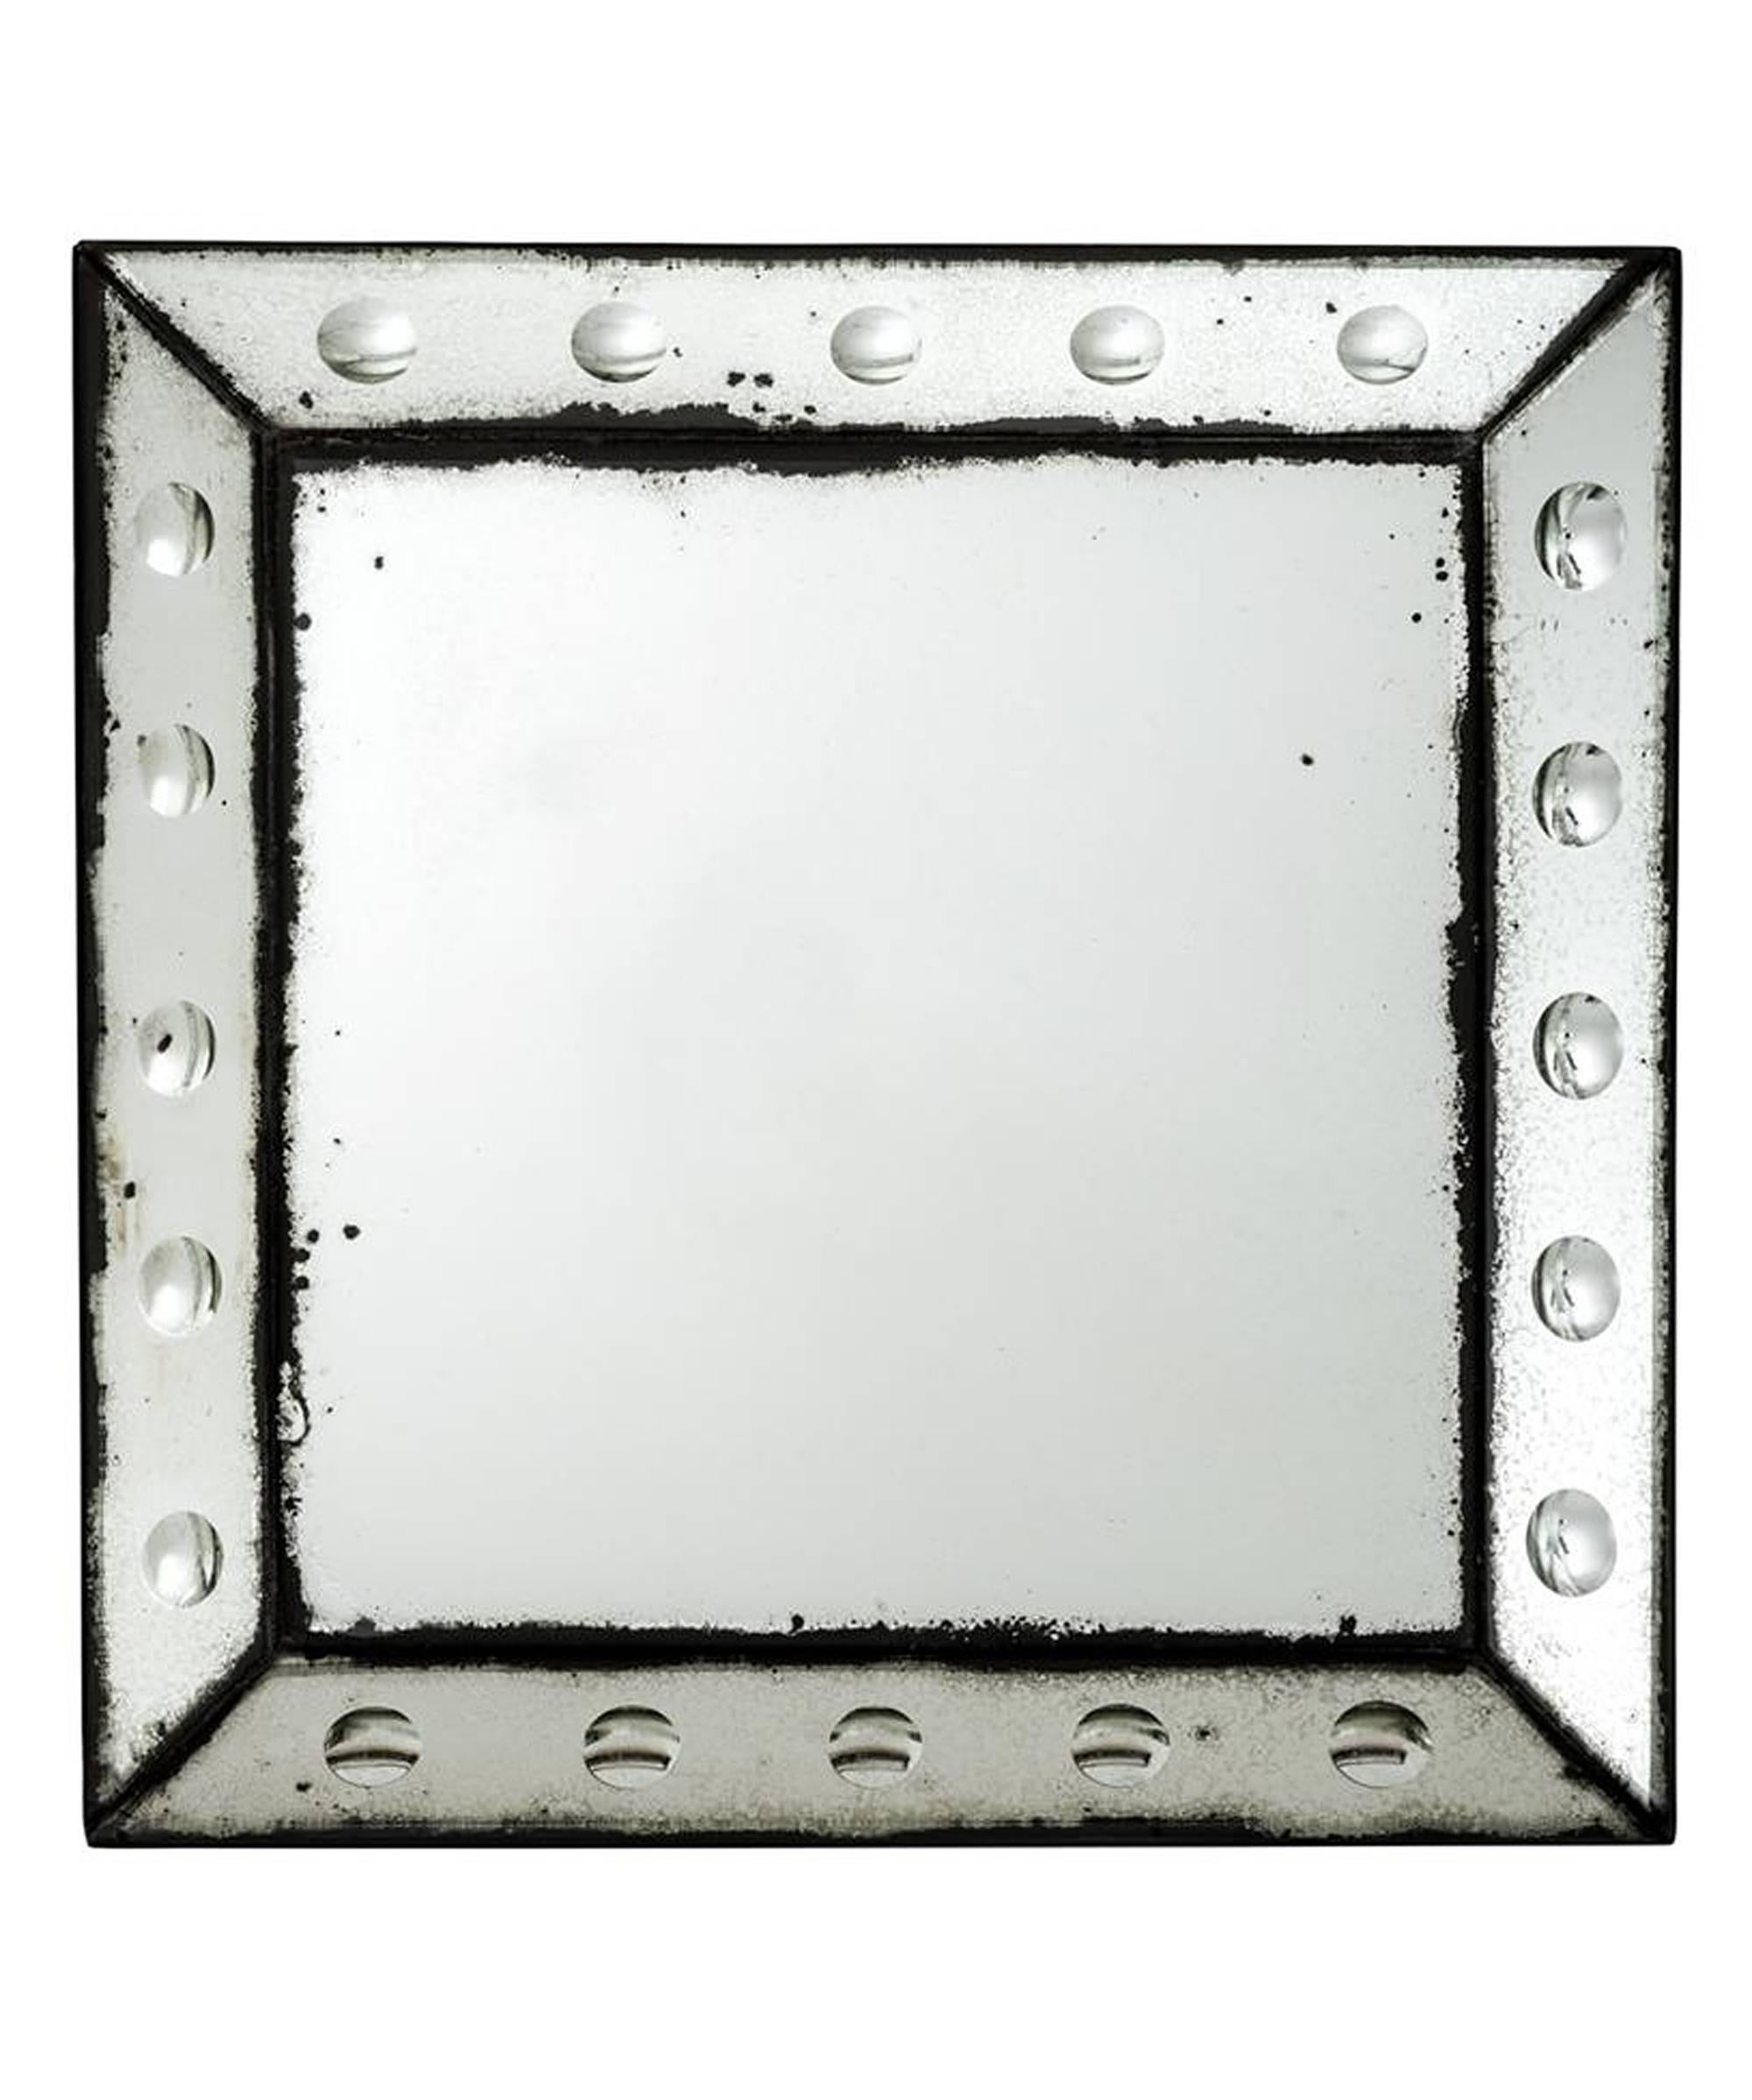 Mirror Valencia square in antique mirror 
glass finish with small round convex mirror
around frame.
Pacific compagnie collection.